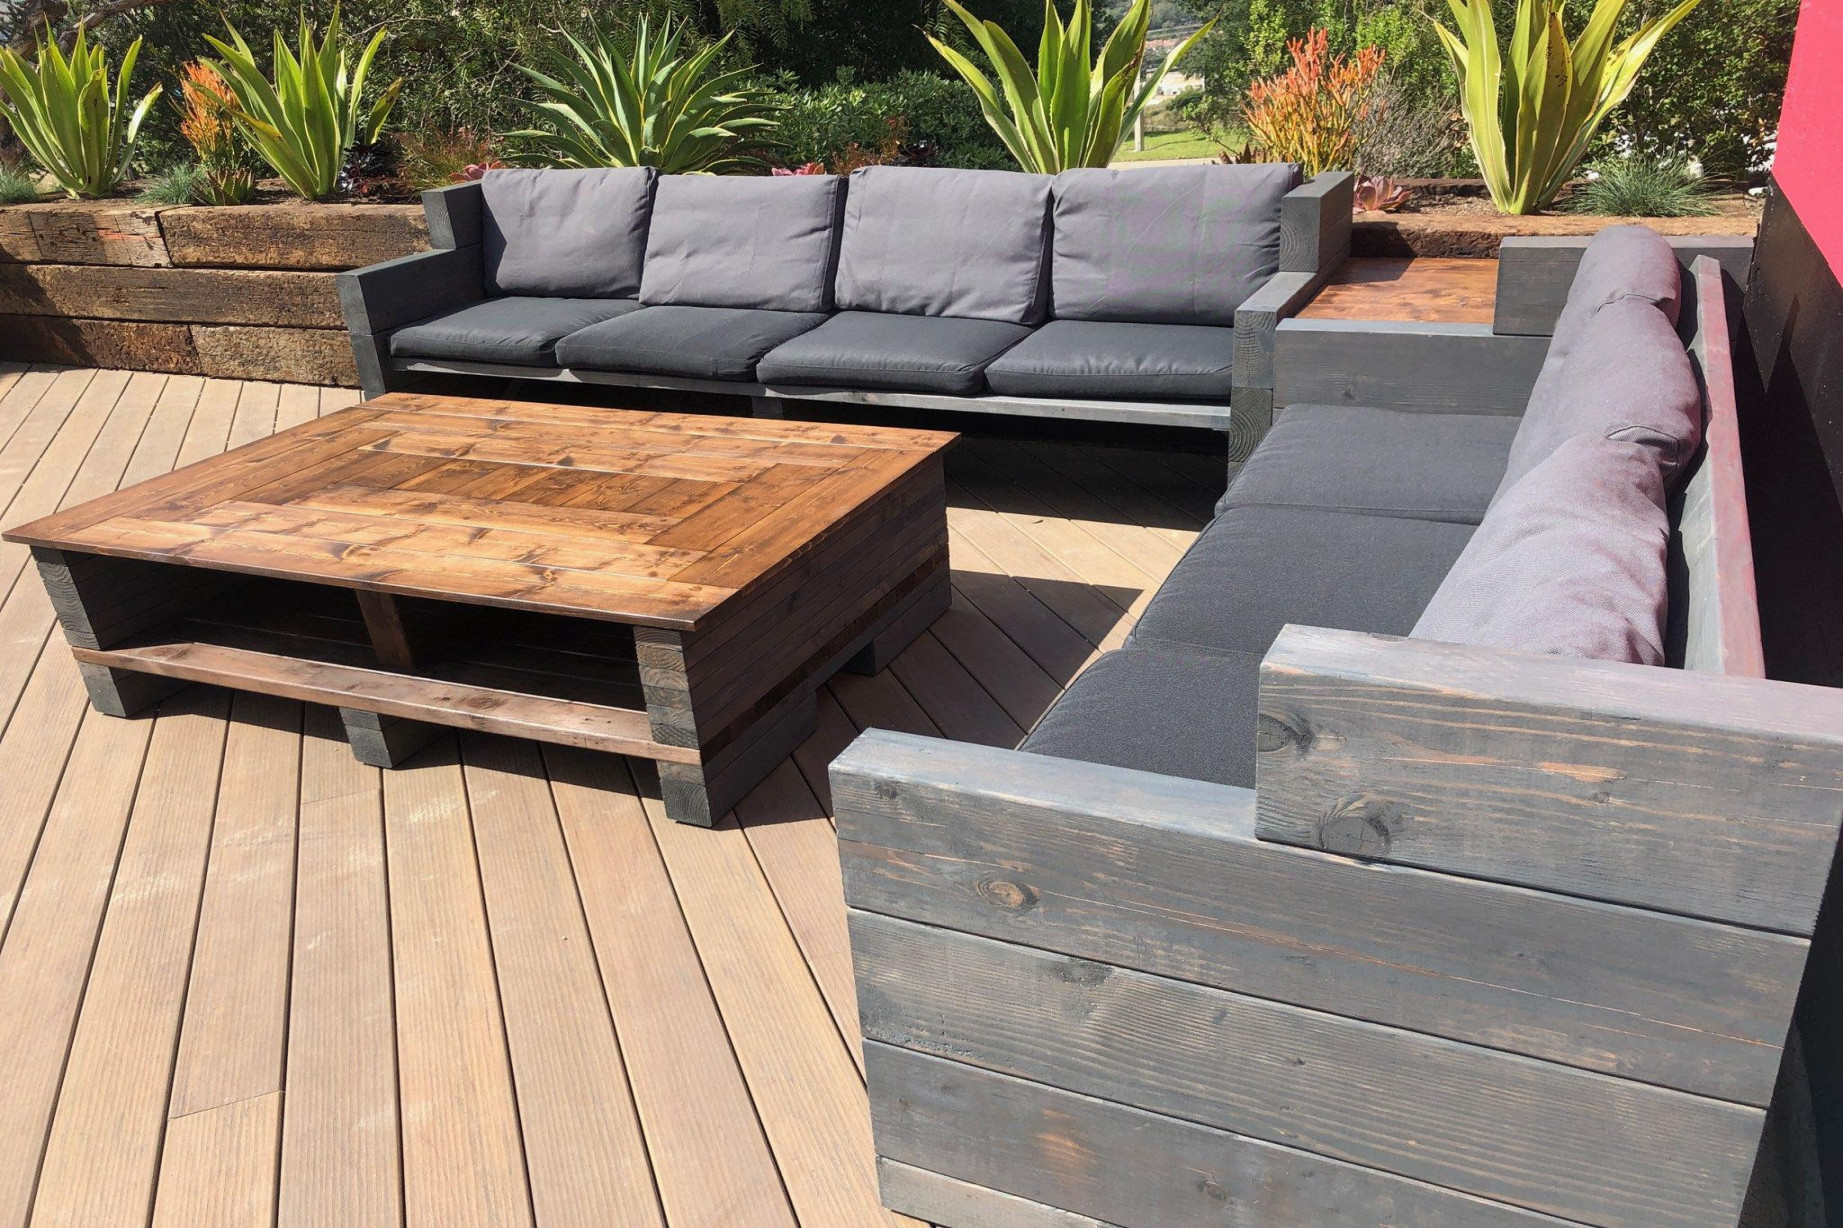 Custom Outdoor Furniture Farmhouse Rustic Wood Patio Set Comfy